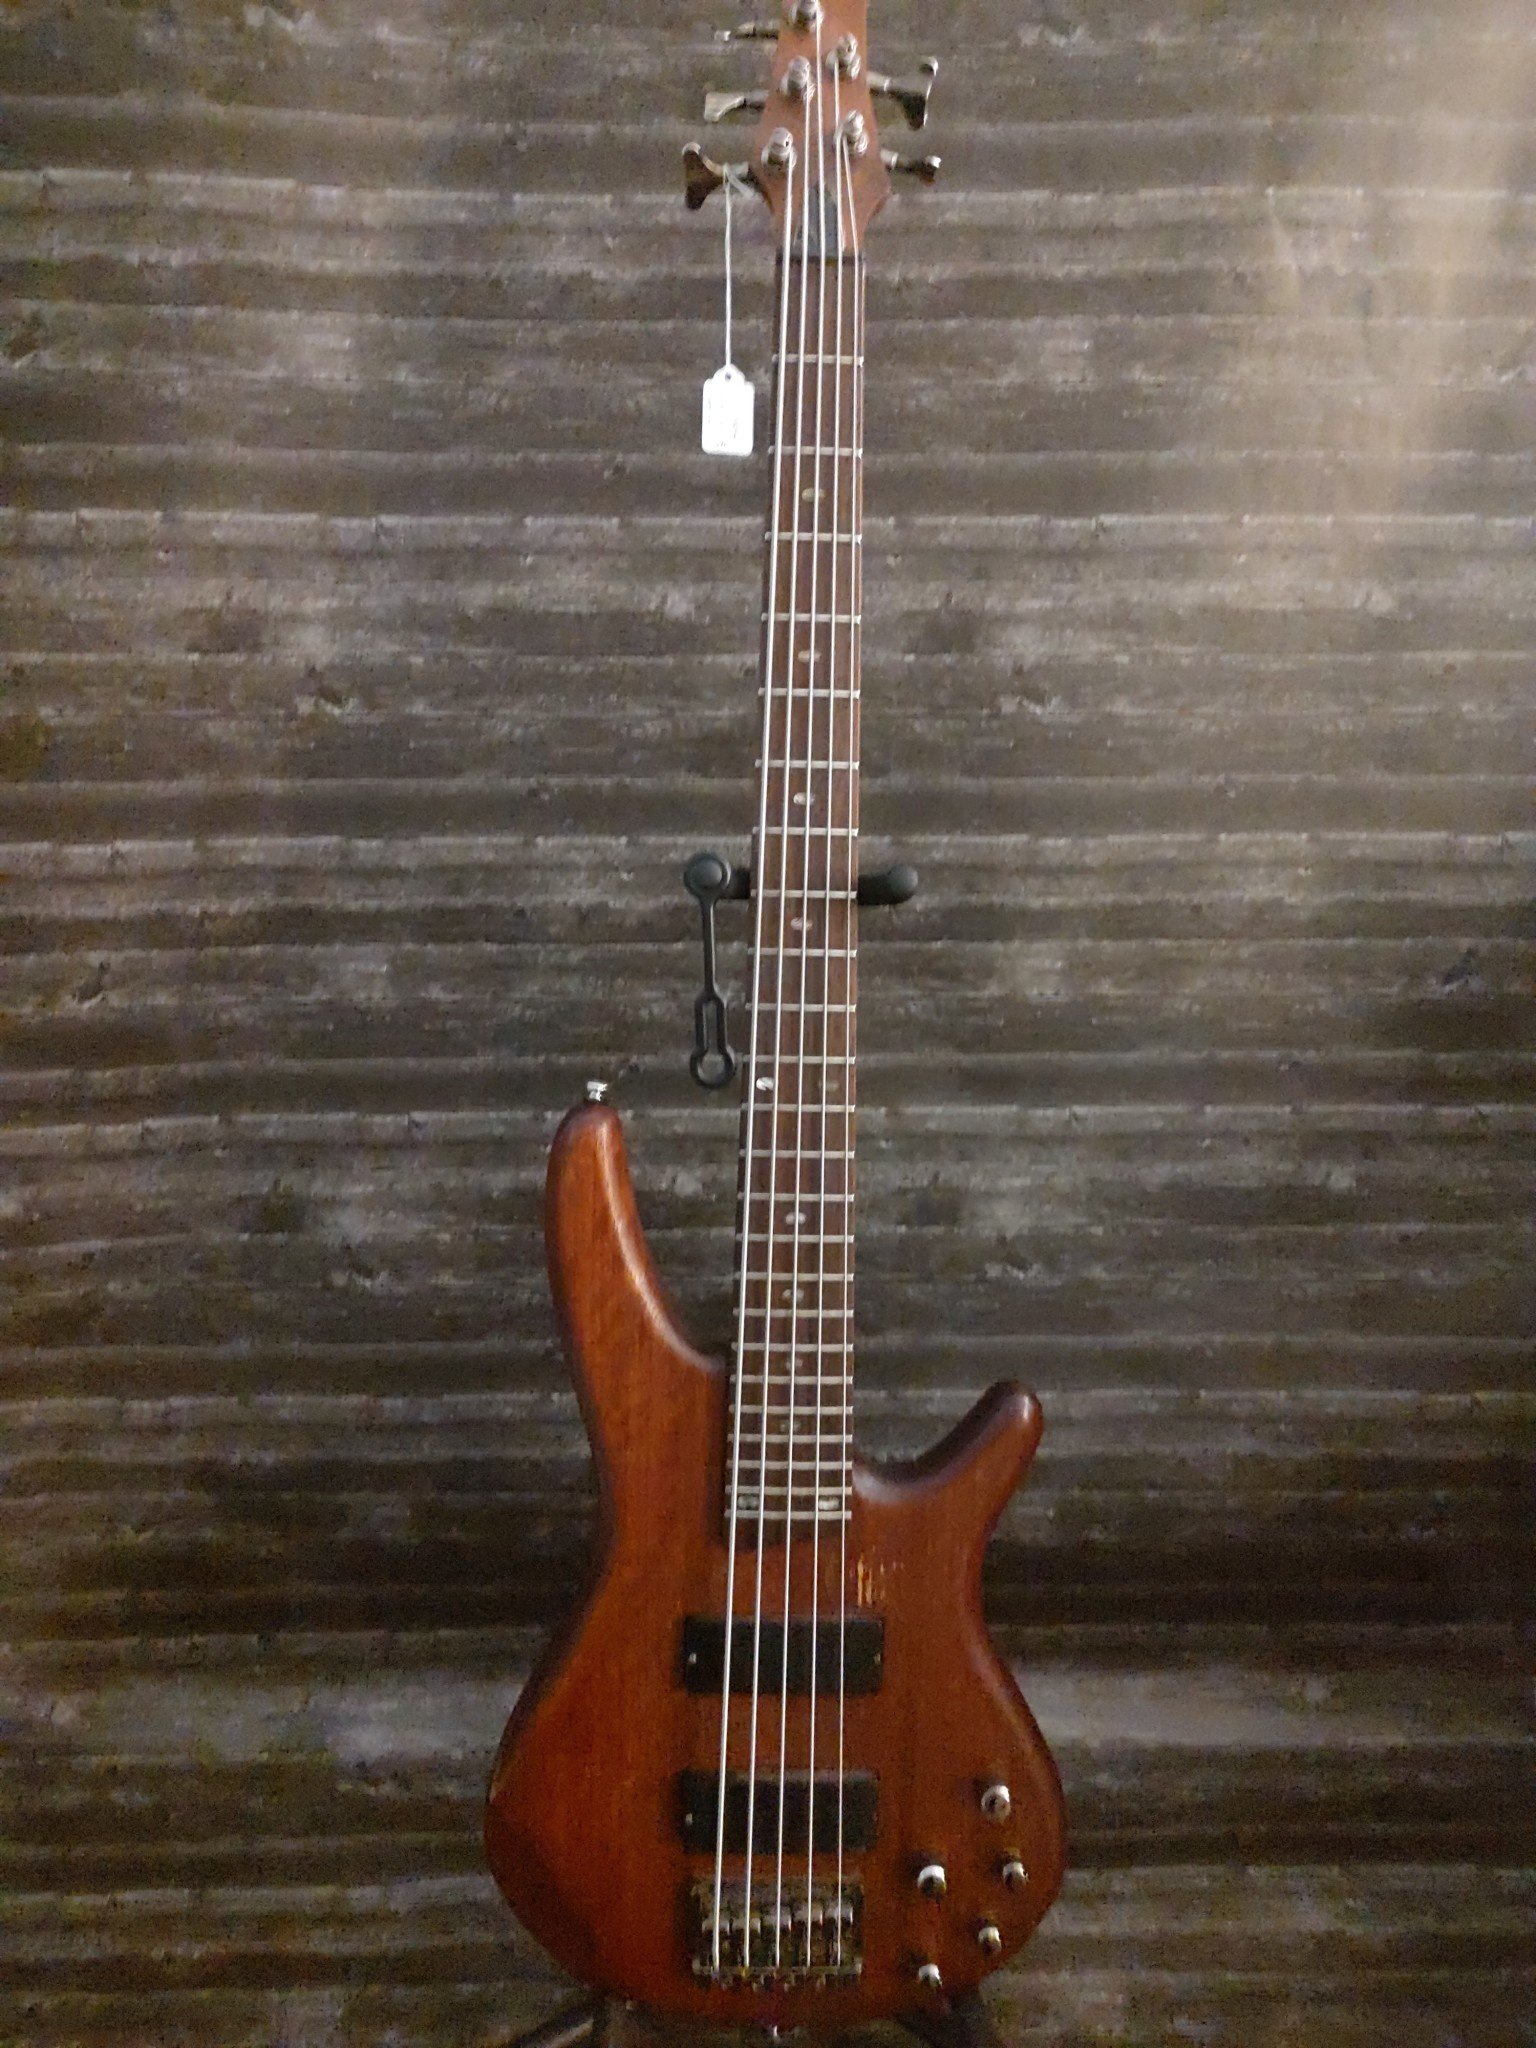 Ibanez SoundGear SR495 5 string bass